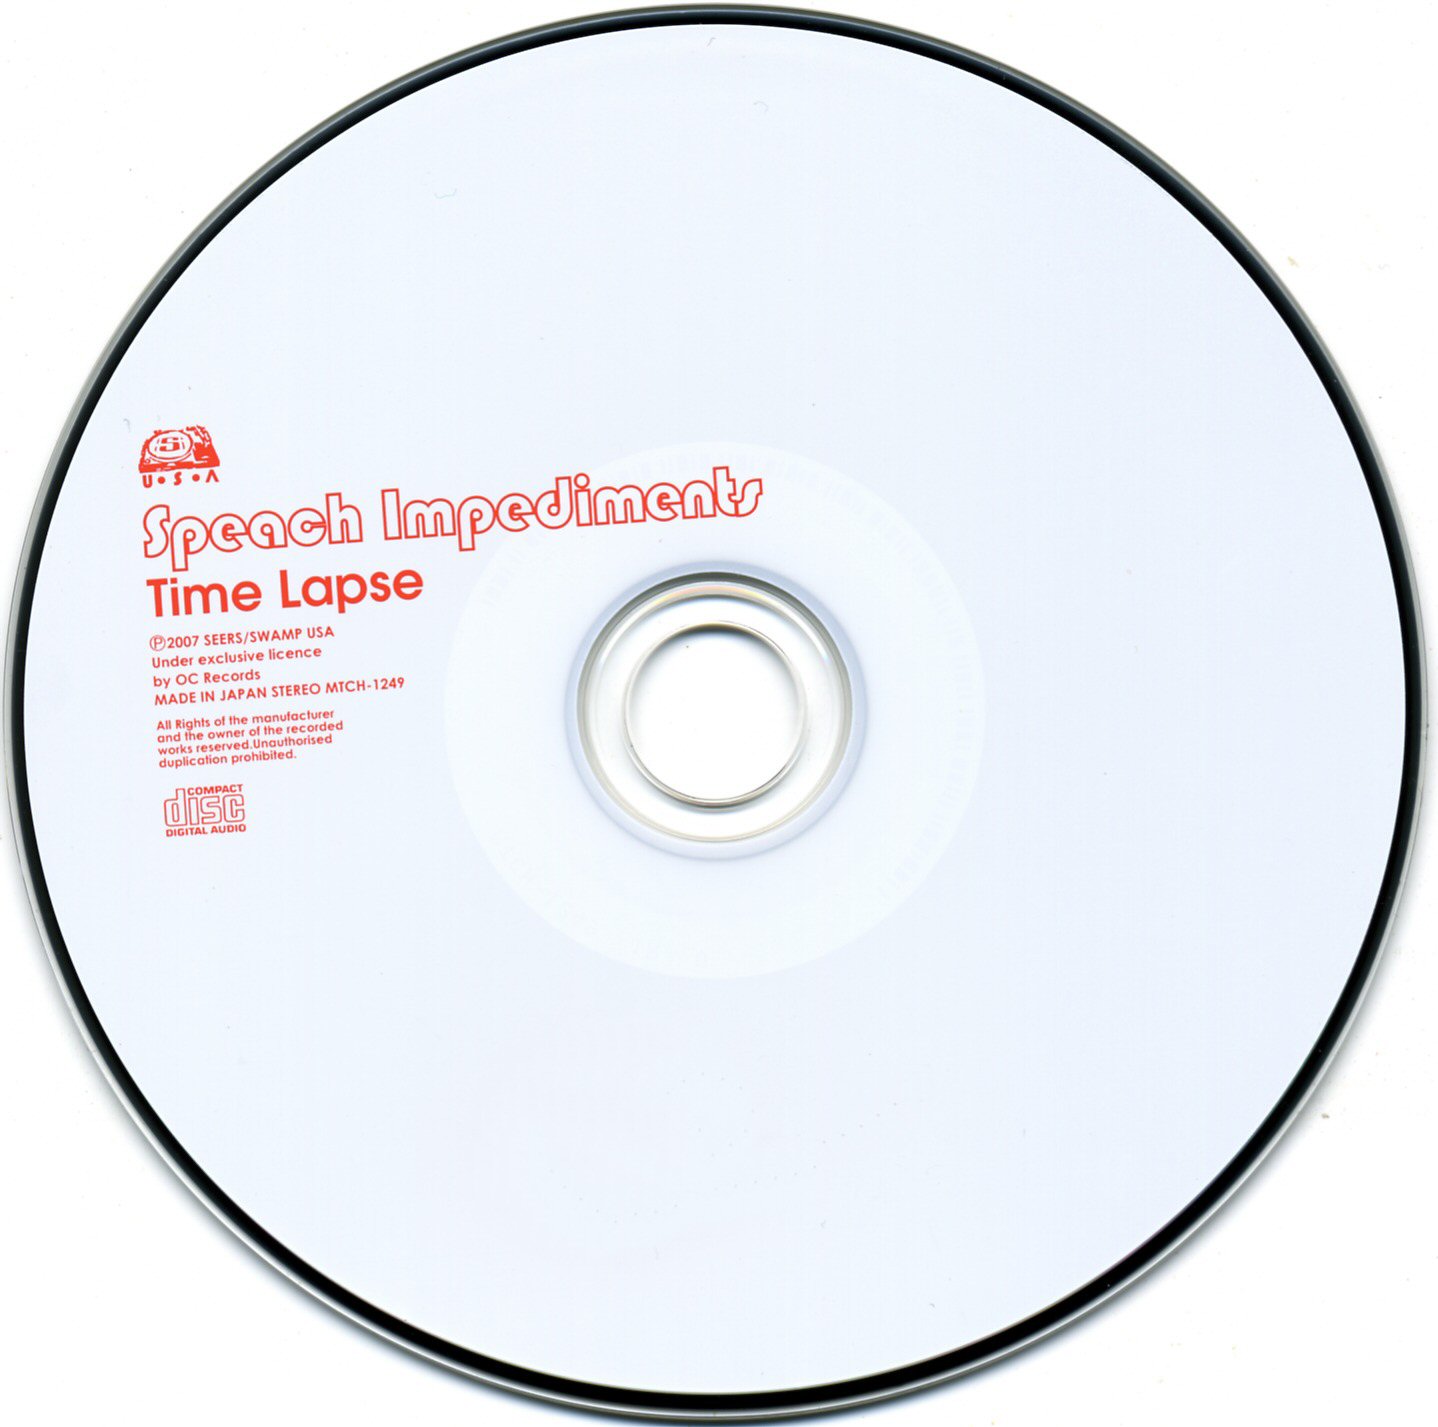 [00-speach_impediments-time_lapse-retail-2007-06-jrp.jpg]